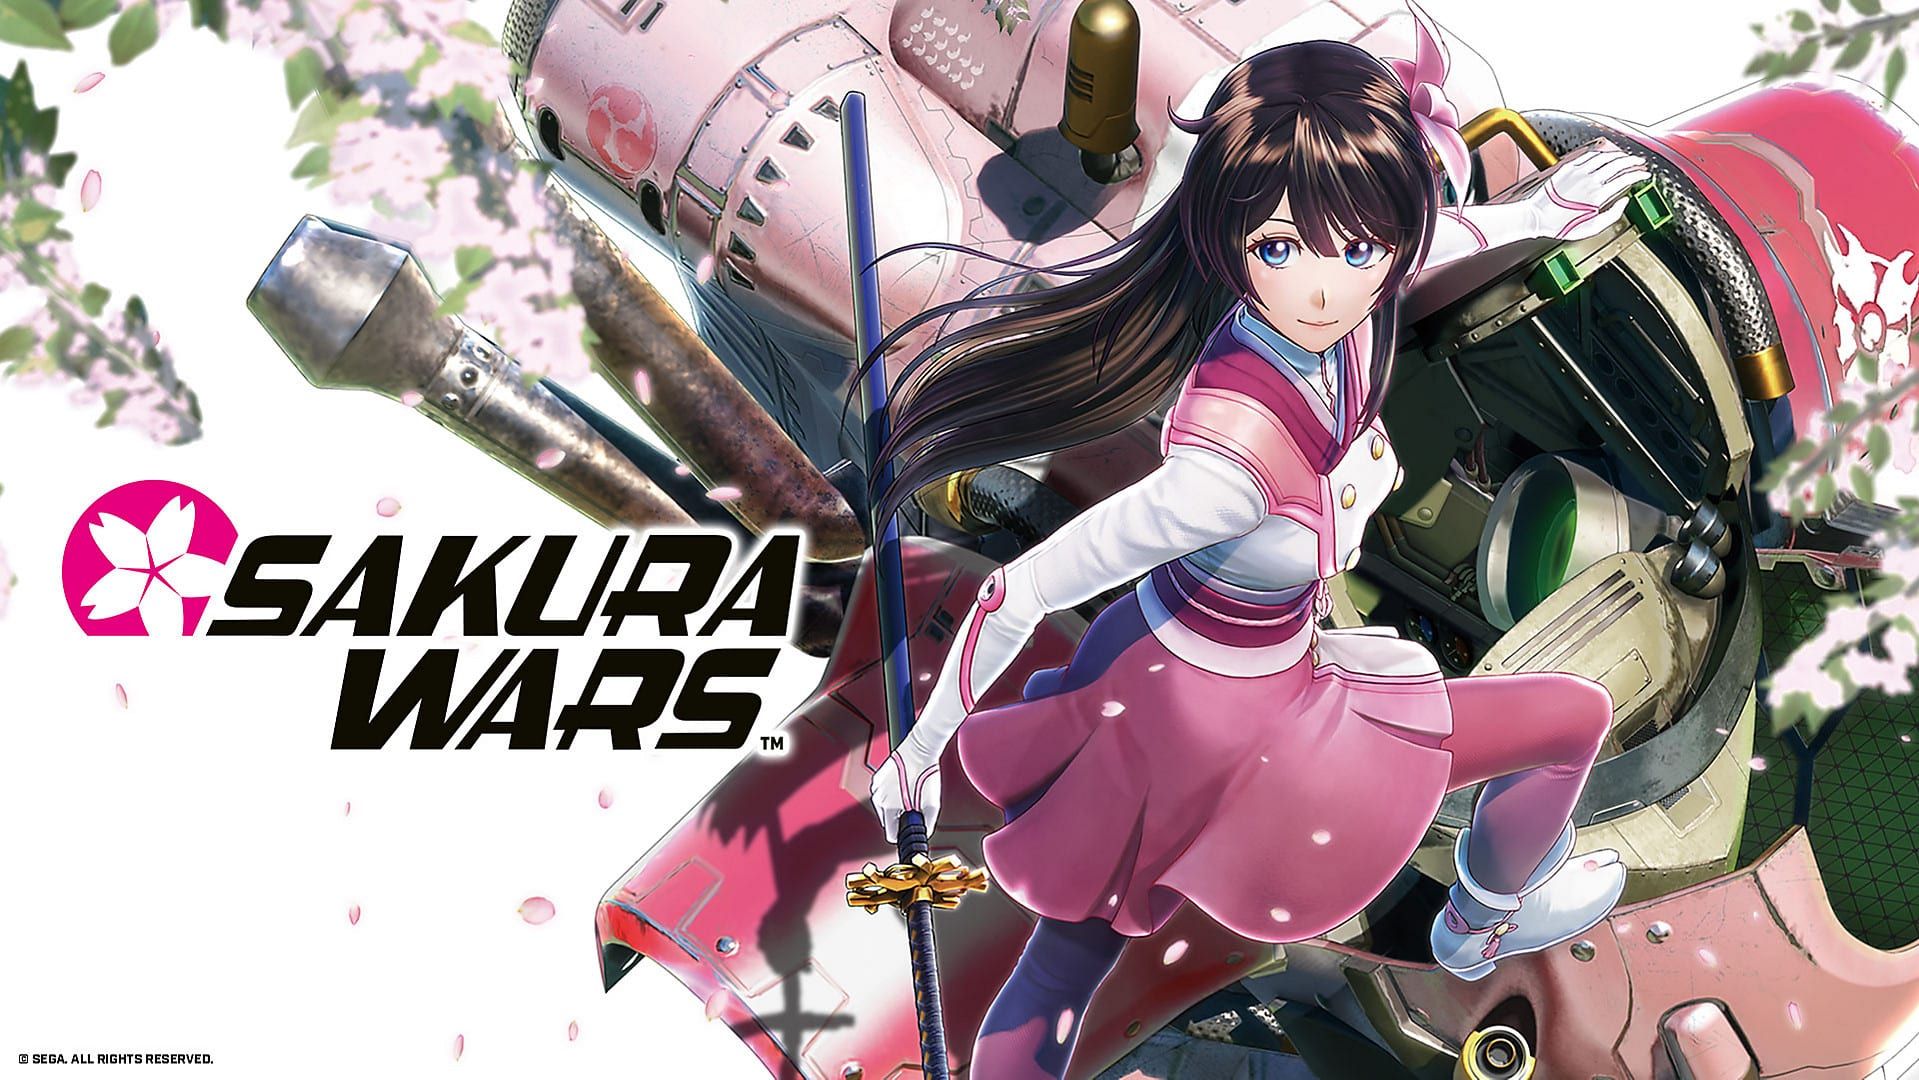 Sakura Wars Gets Wallpaper for Your Desktop or Mobile and PS4